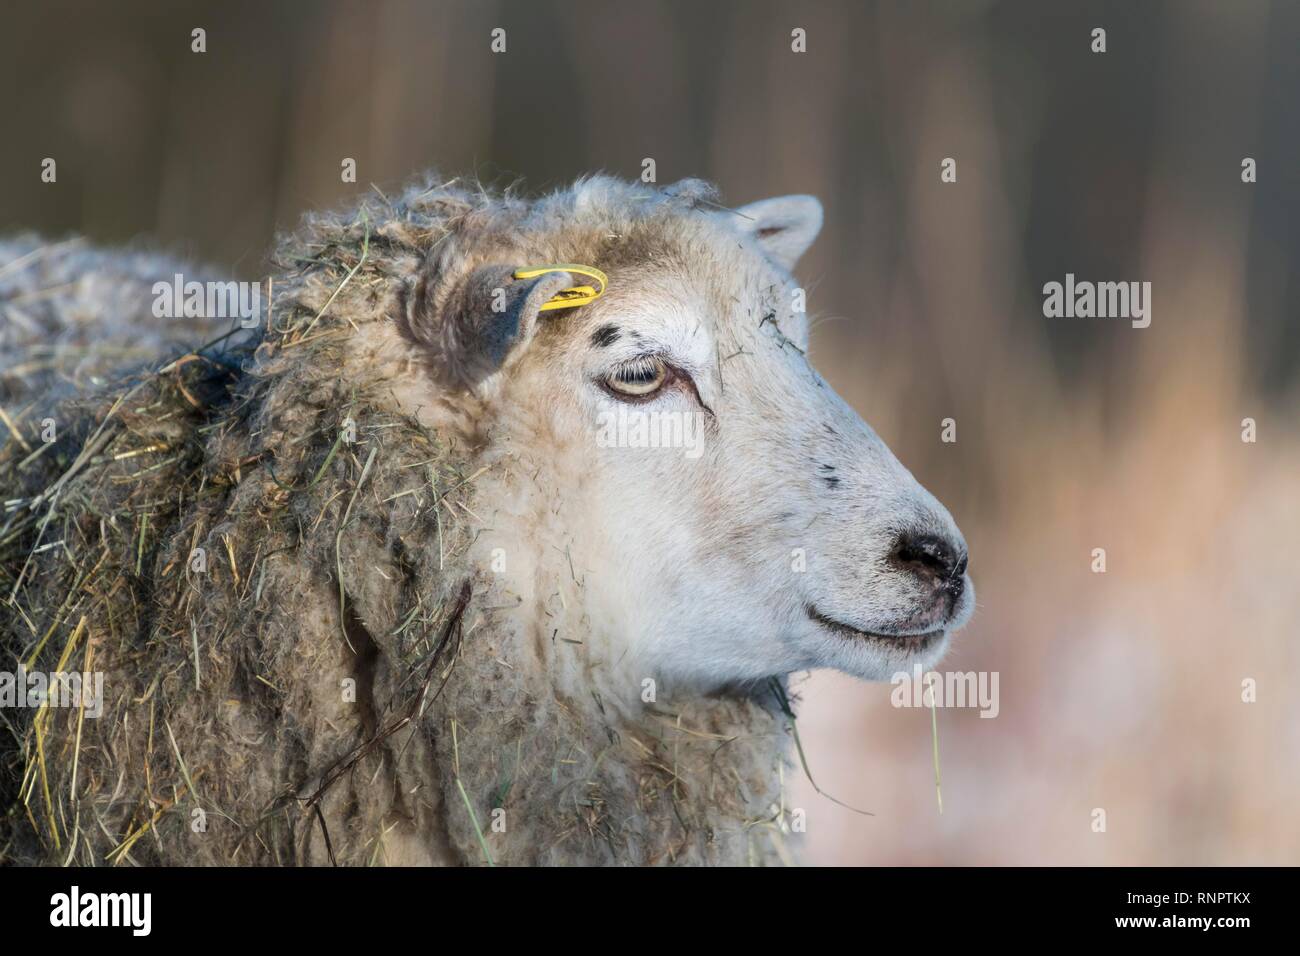 Old domestic sheep breed Skudde in winter, red list, animal portrait, captive, Brandenburg, Germany Stock Photo